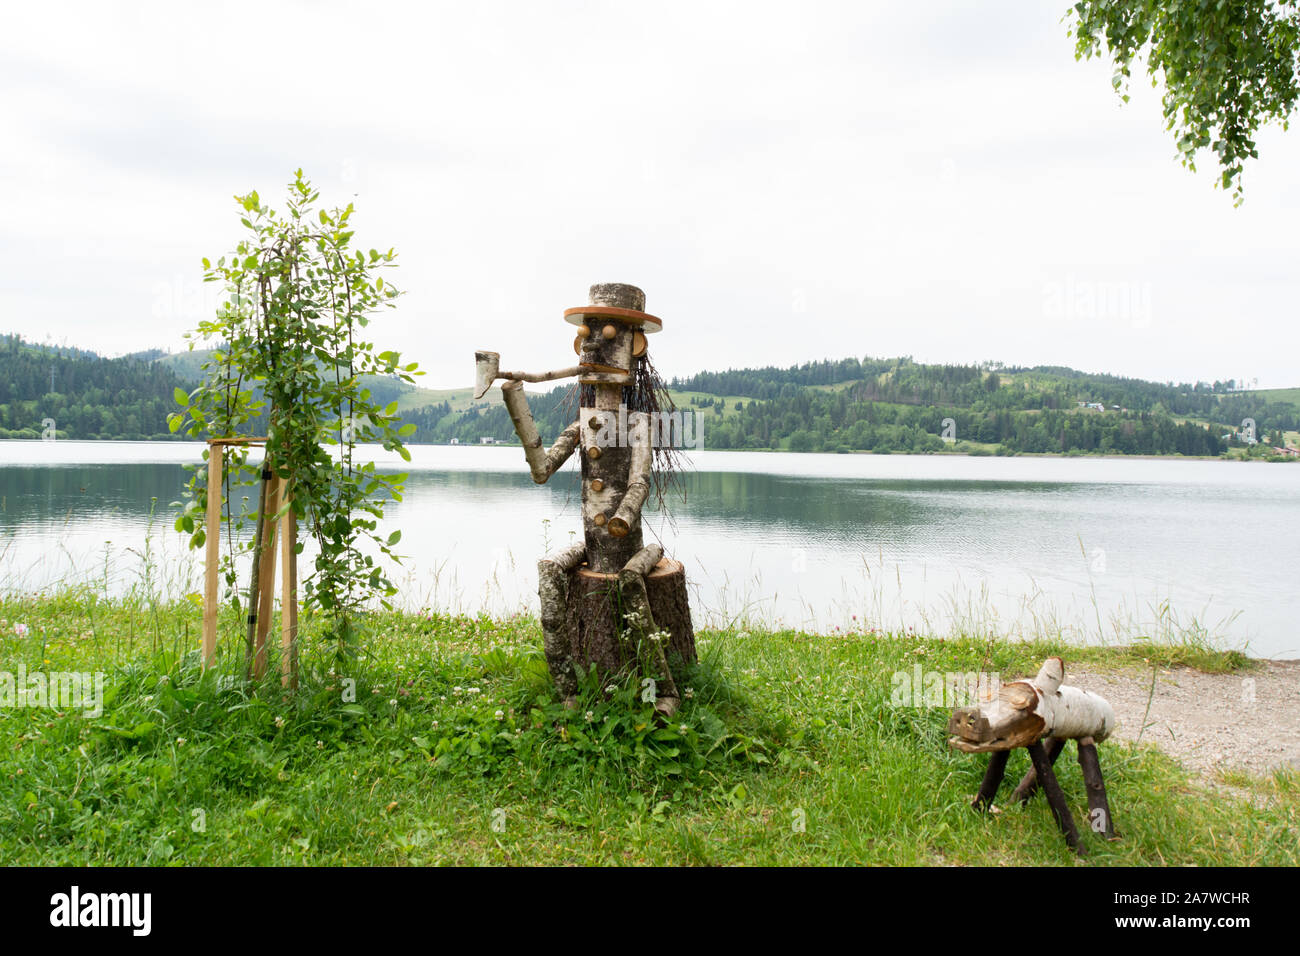 Dedinky, Roznava, Kosice region / Slovakia -  statue of a character smoking a pipe accompanied by his pet, on a lake Stock Photo